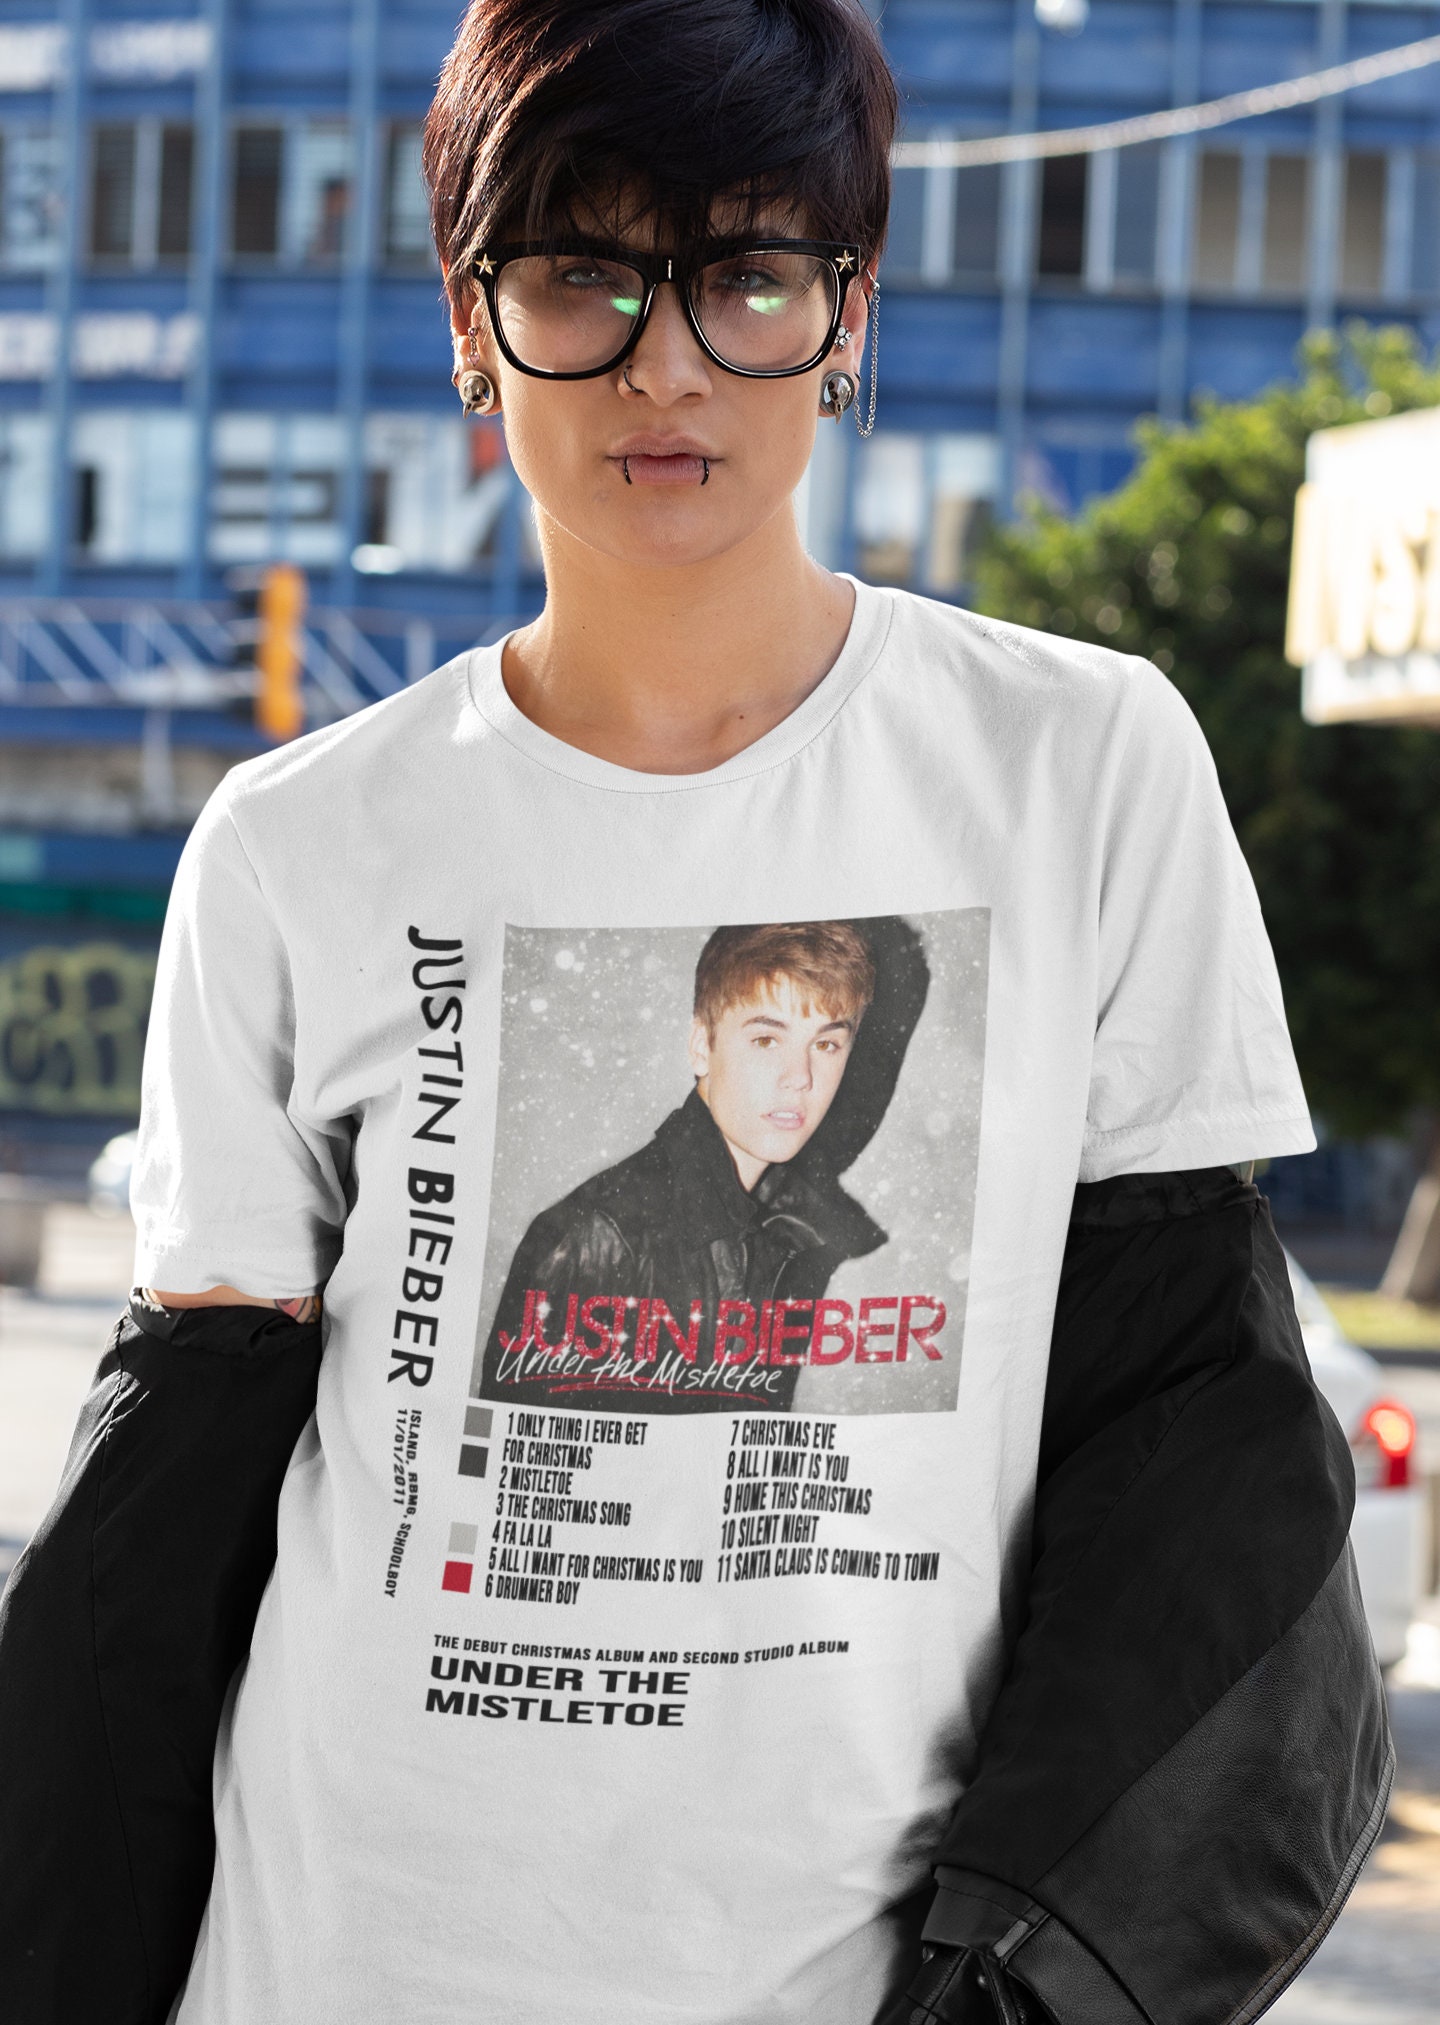 Discover Justin Bieber - Under the Mistletoe Shirt